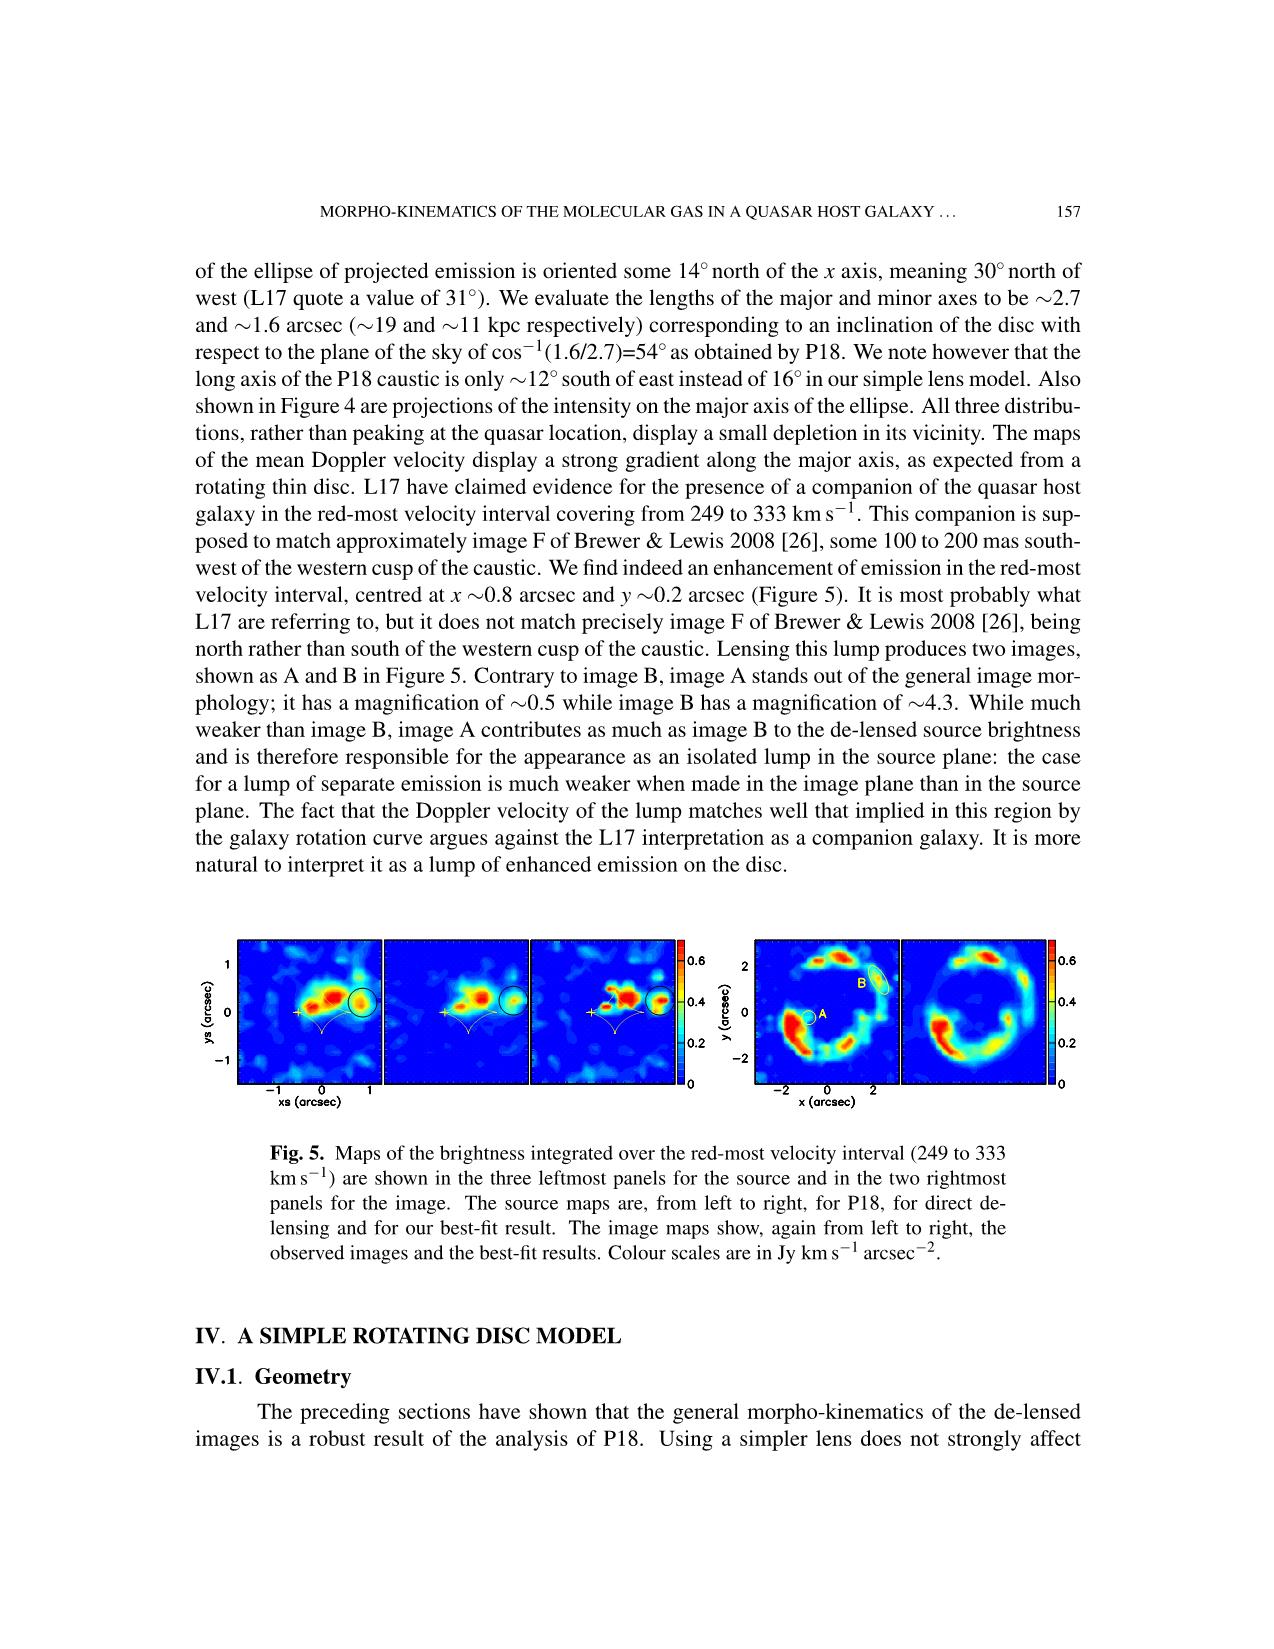 Morpho-Kinematics of the molecular gas in a quasar host galaxy at redshift z = 0:654 trang 9